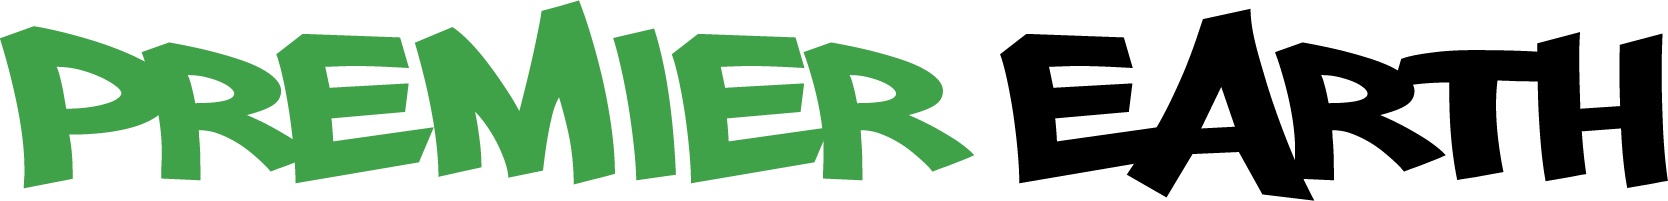 Premier Earth Corp. (Rec) logo